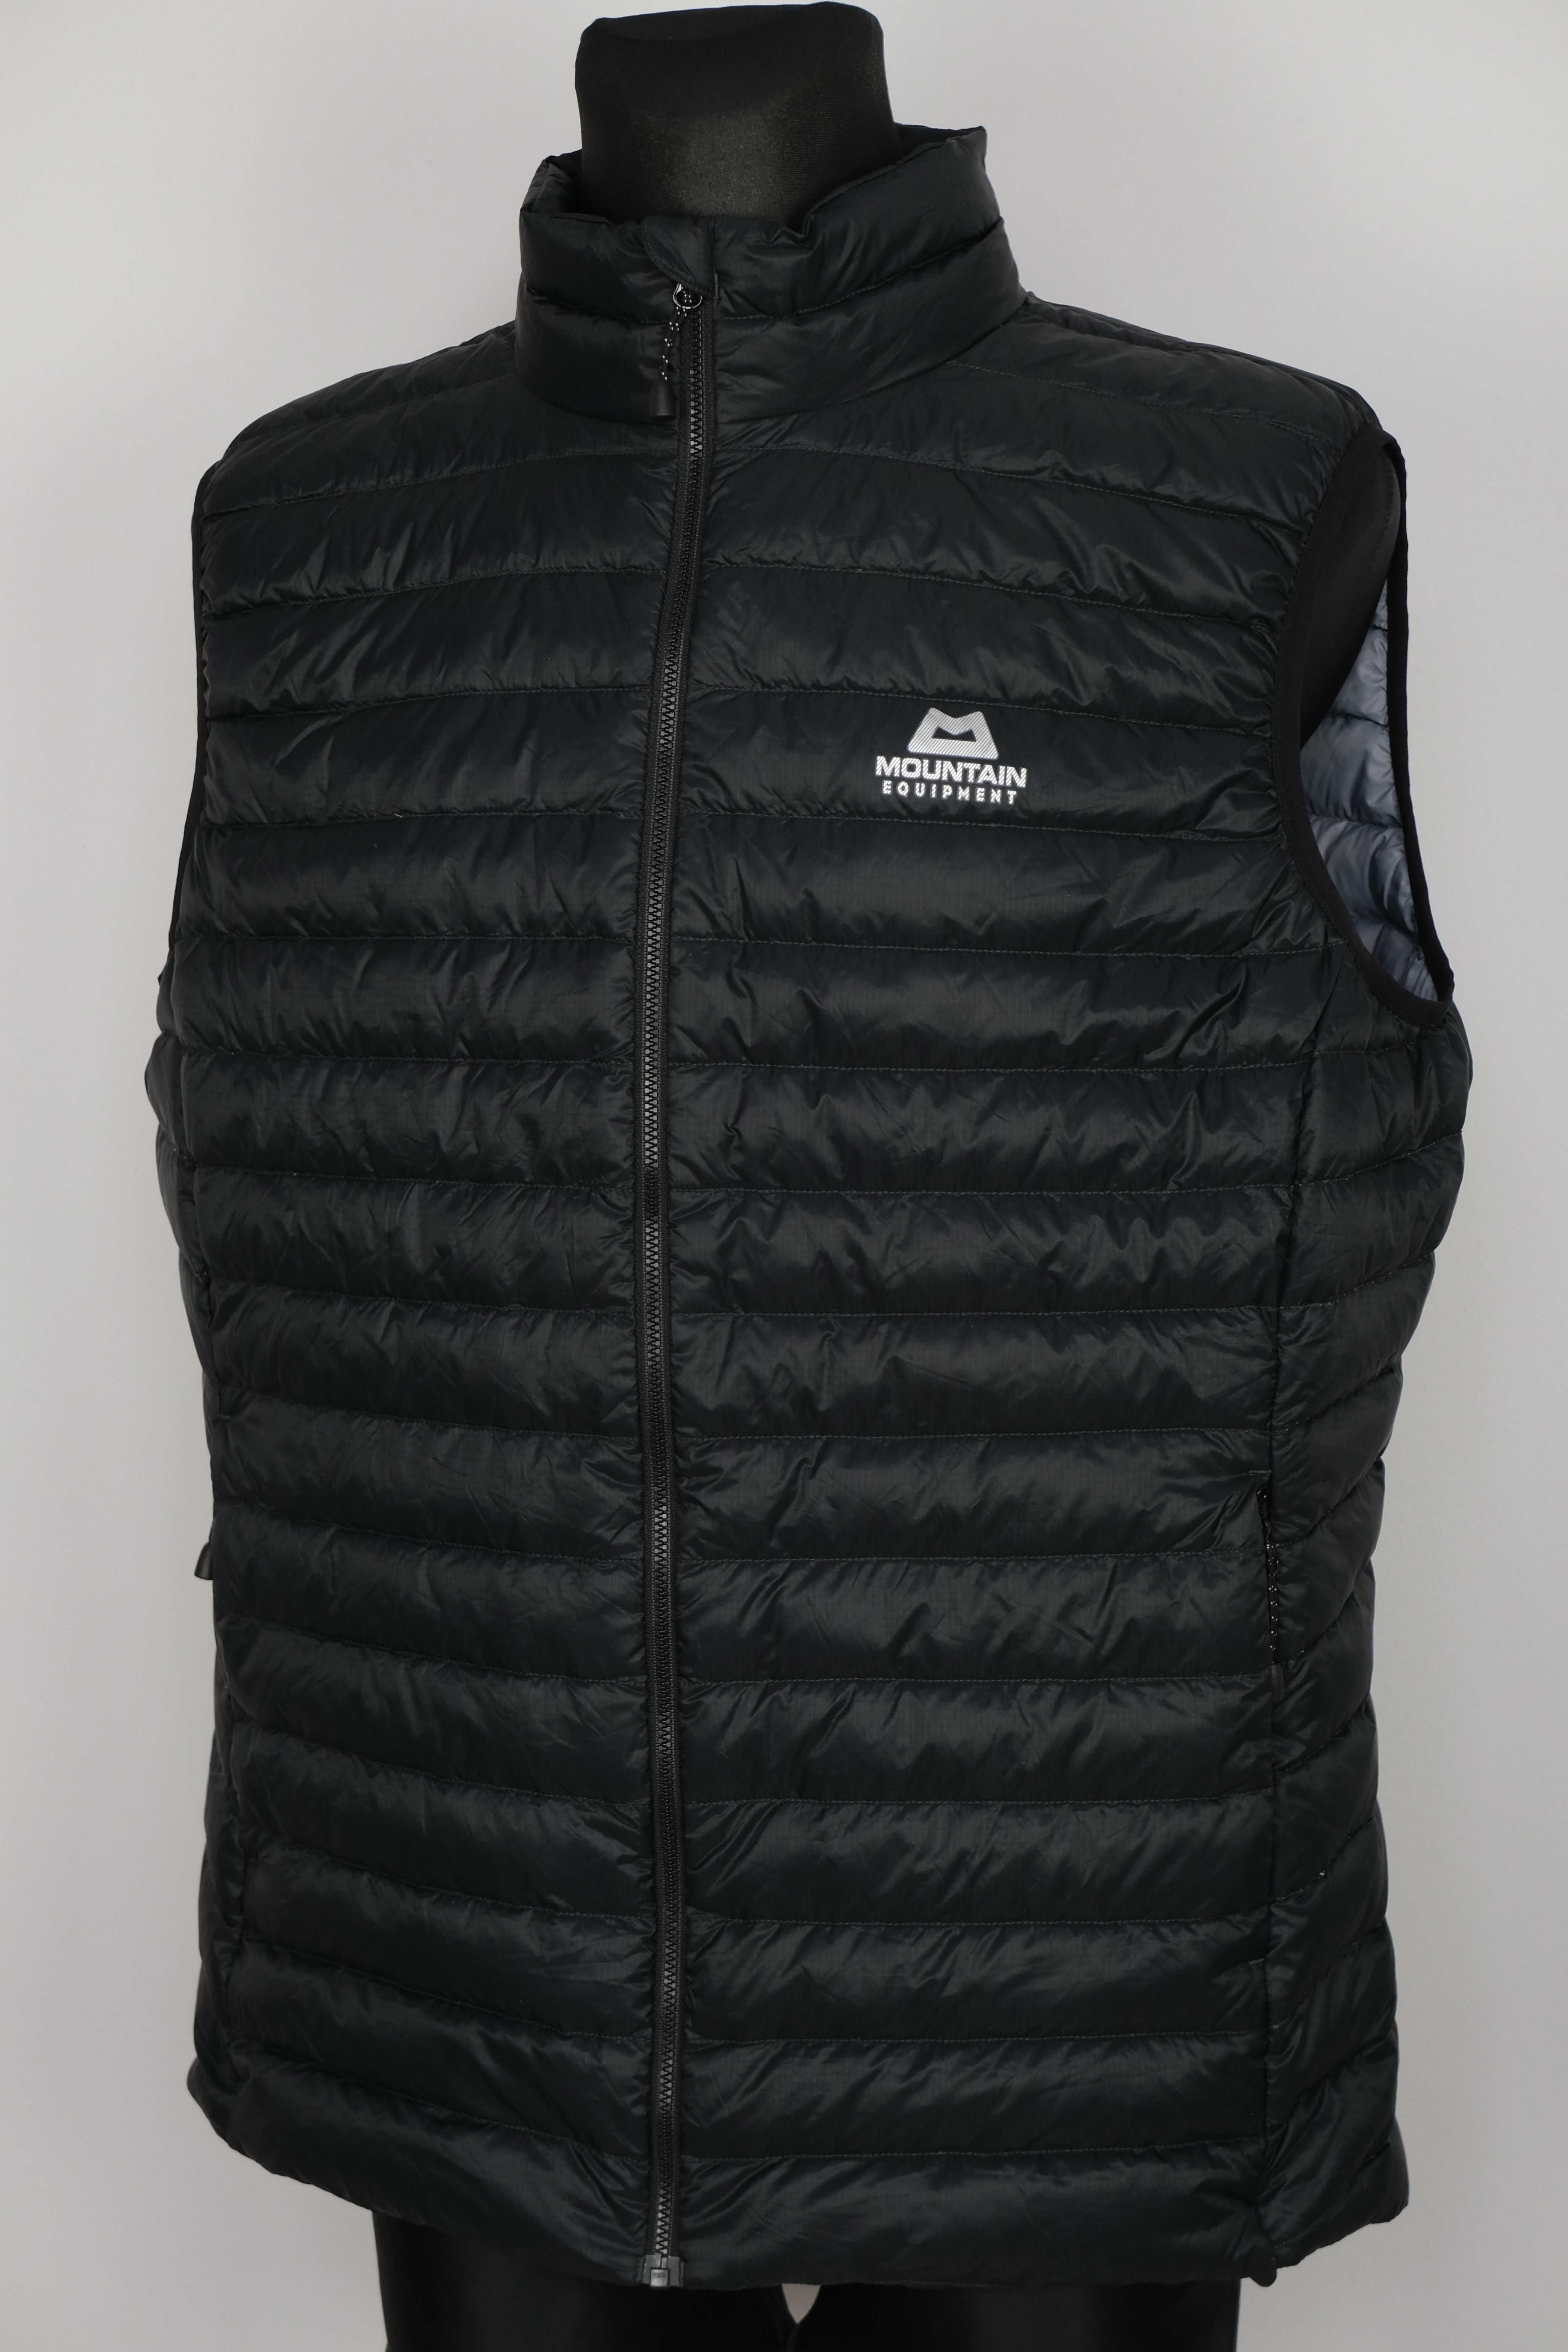 Moutain Equipment frostline vest puchowa kamizelka męska r XL  st idea